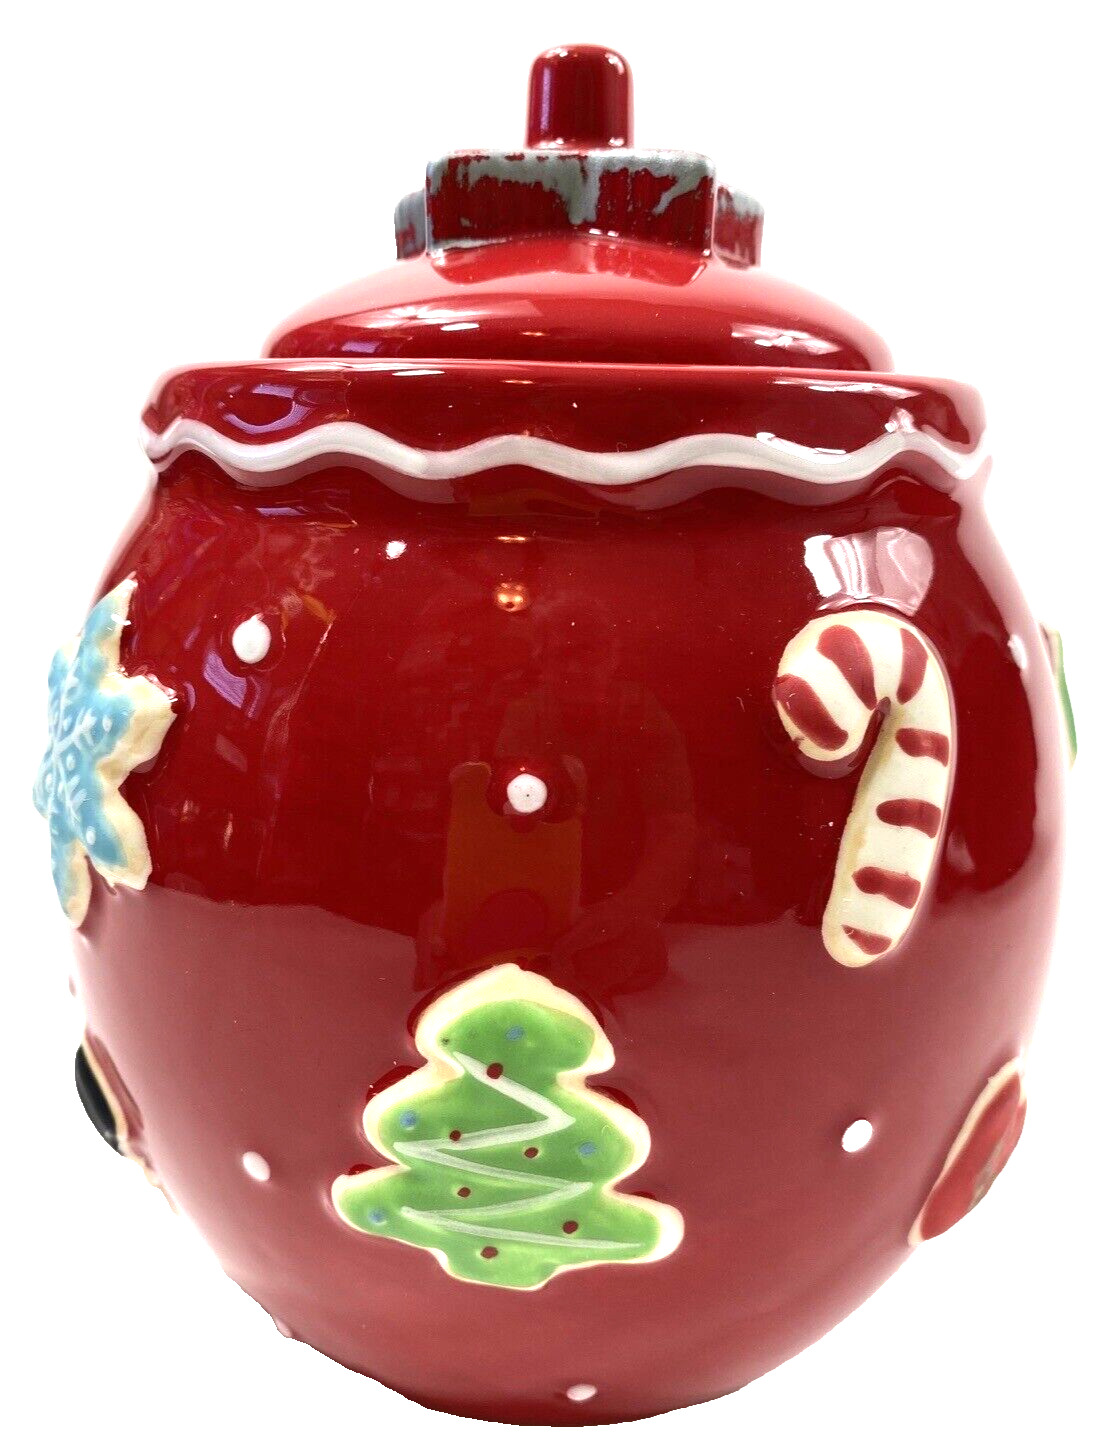 Hallmark Red Ornament Shaped Decorated Ceramic Cookie Jar